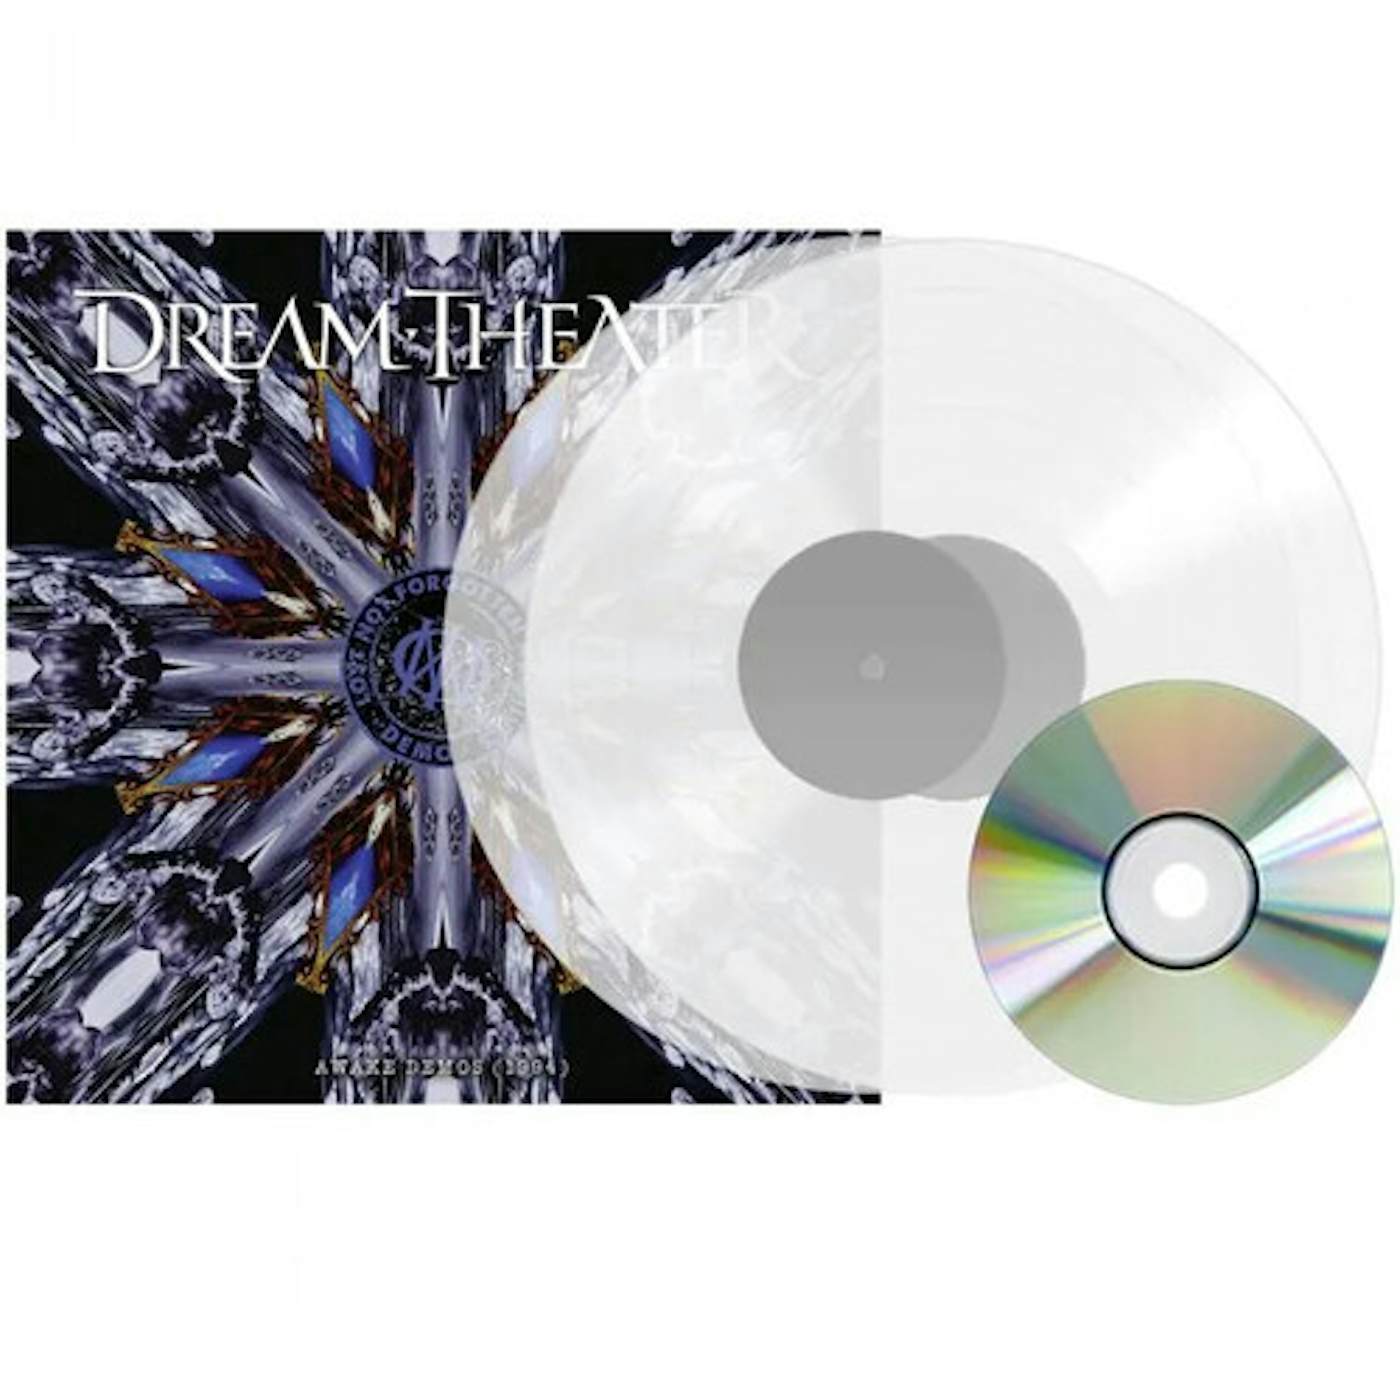 Dream Theater Lost Not Forgotten Archives: Awake Demos (1994) Vinyl Record